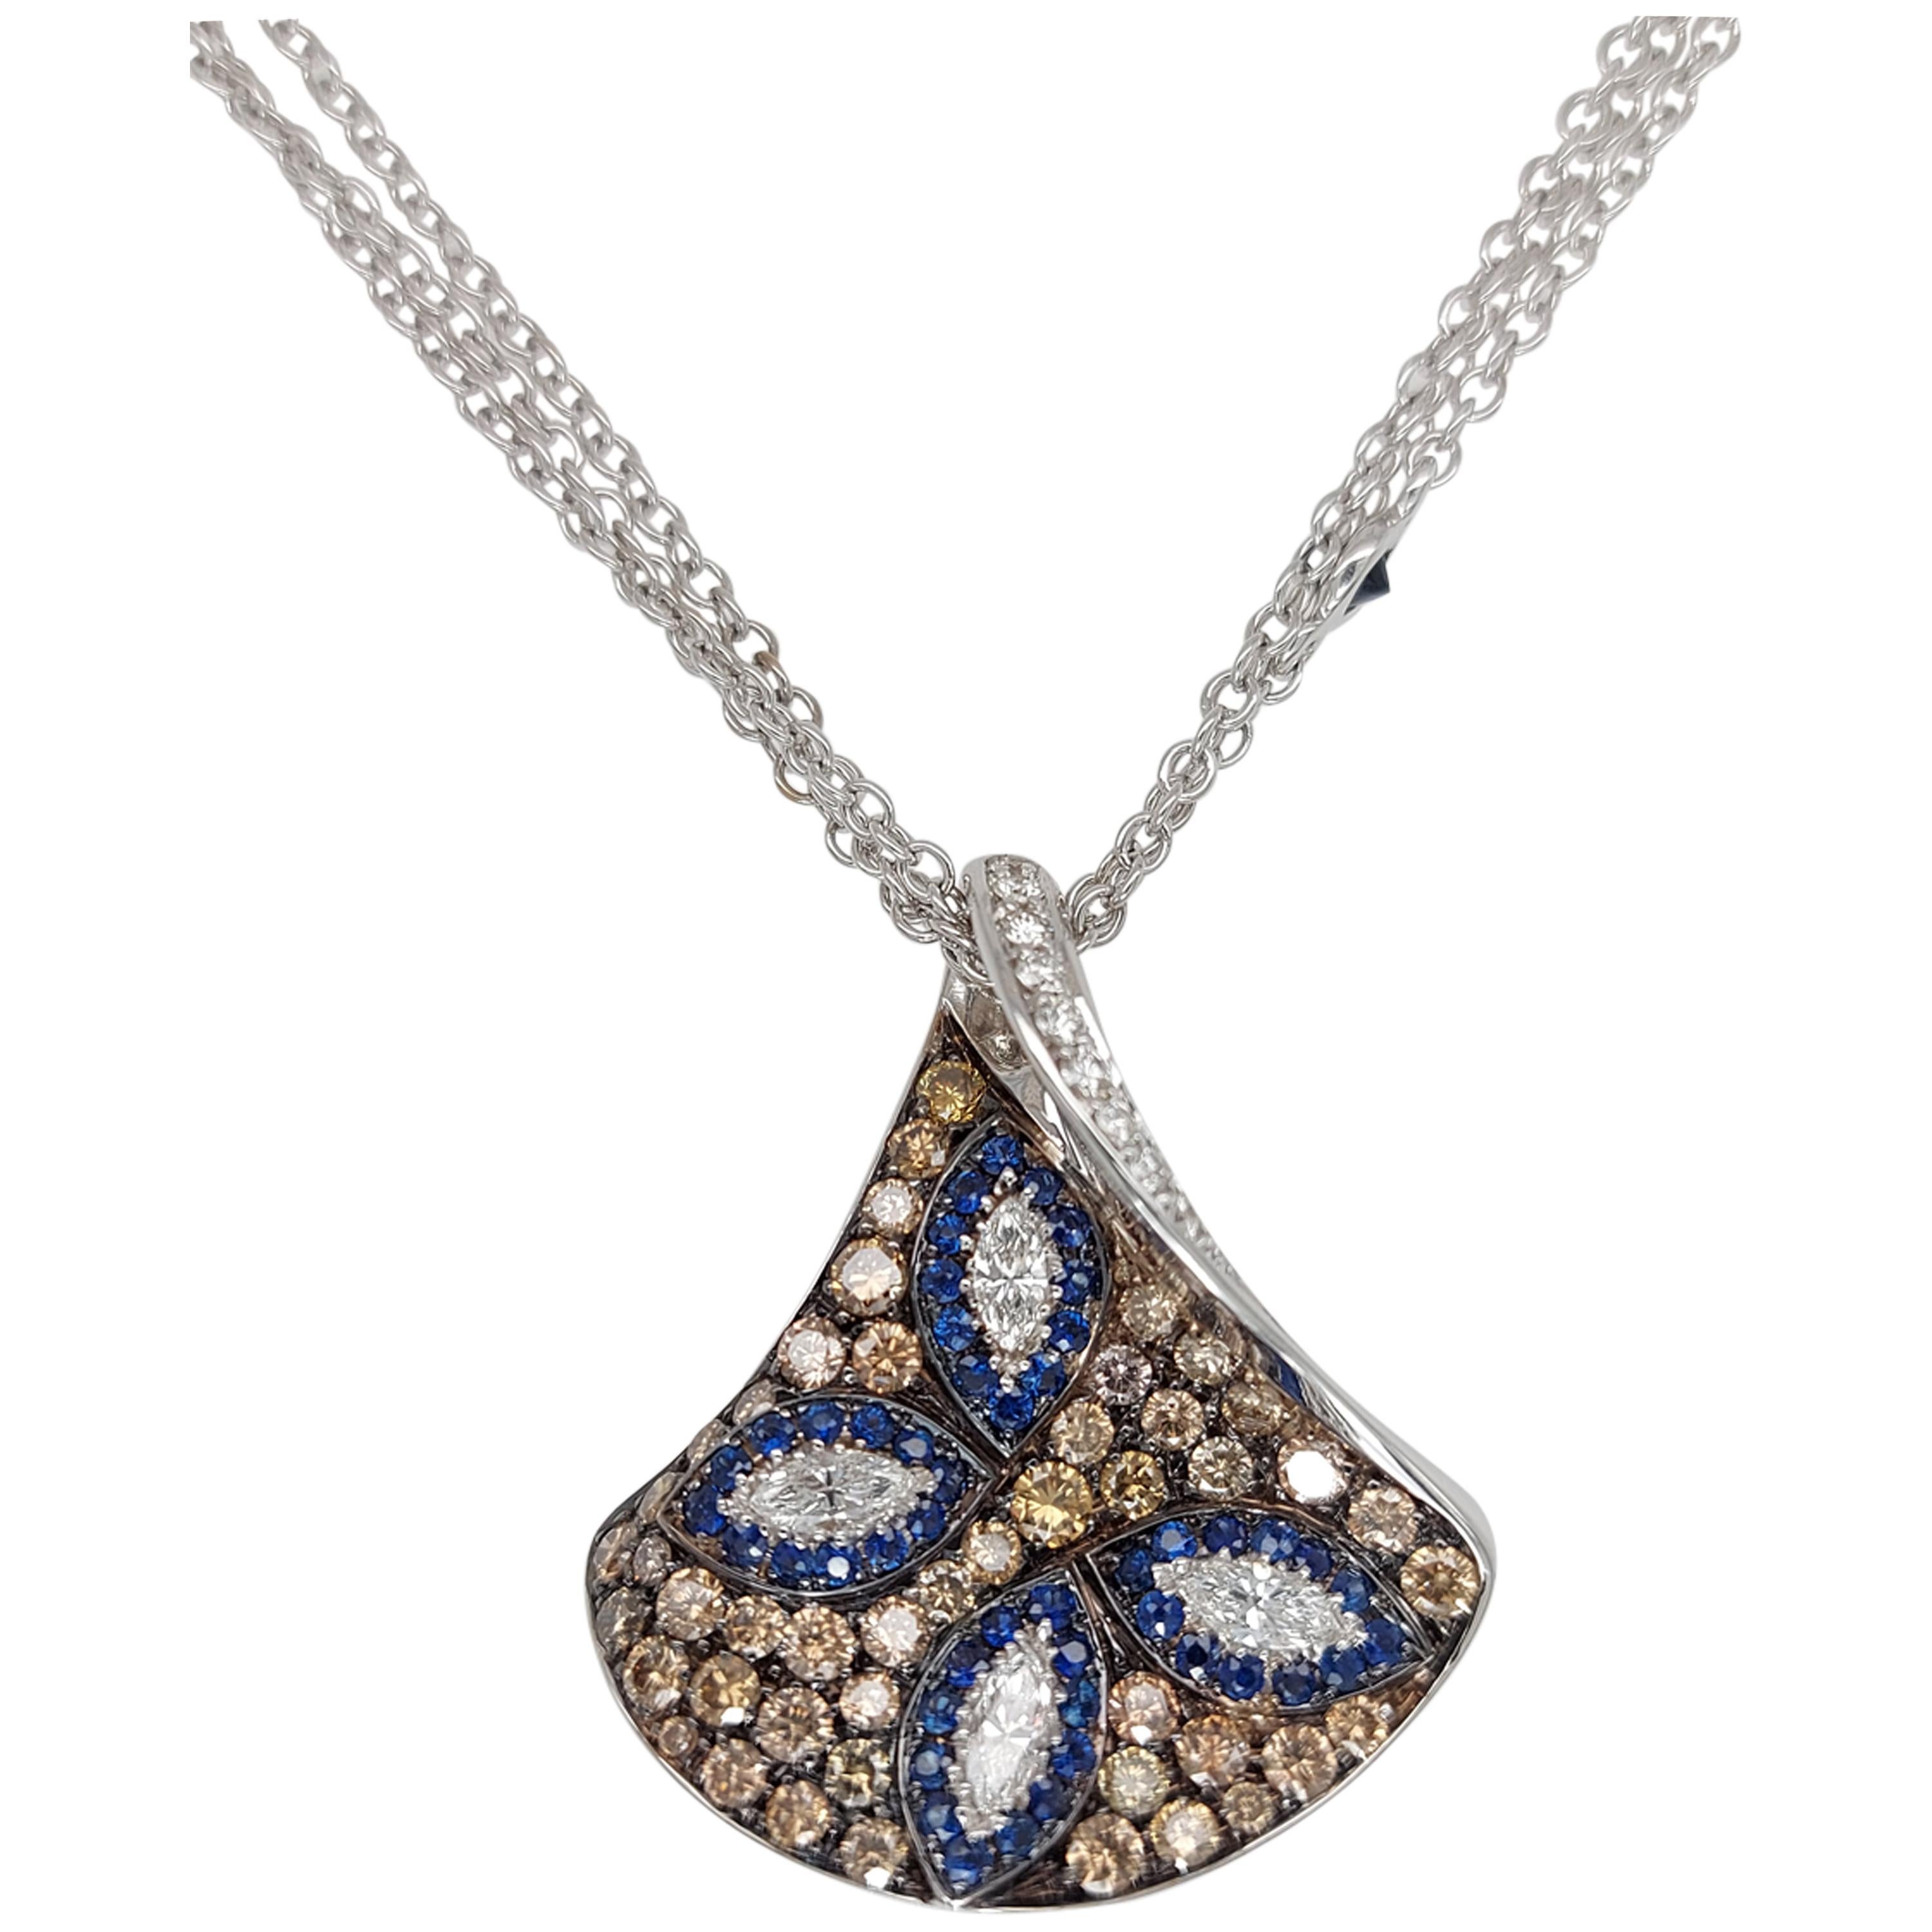 18kt White Gold, White & Brown Diamonds & Sapphire, Triangle Pendant Necklace